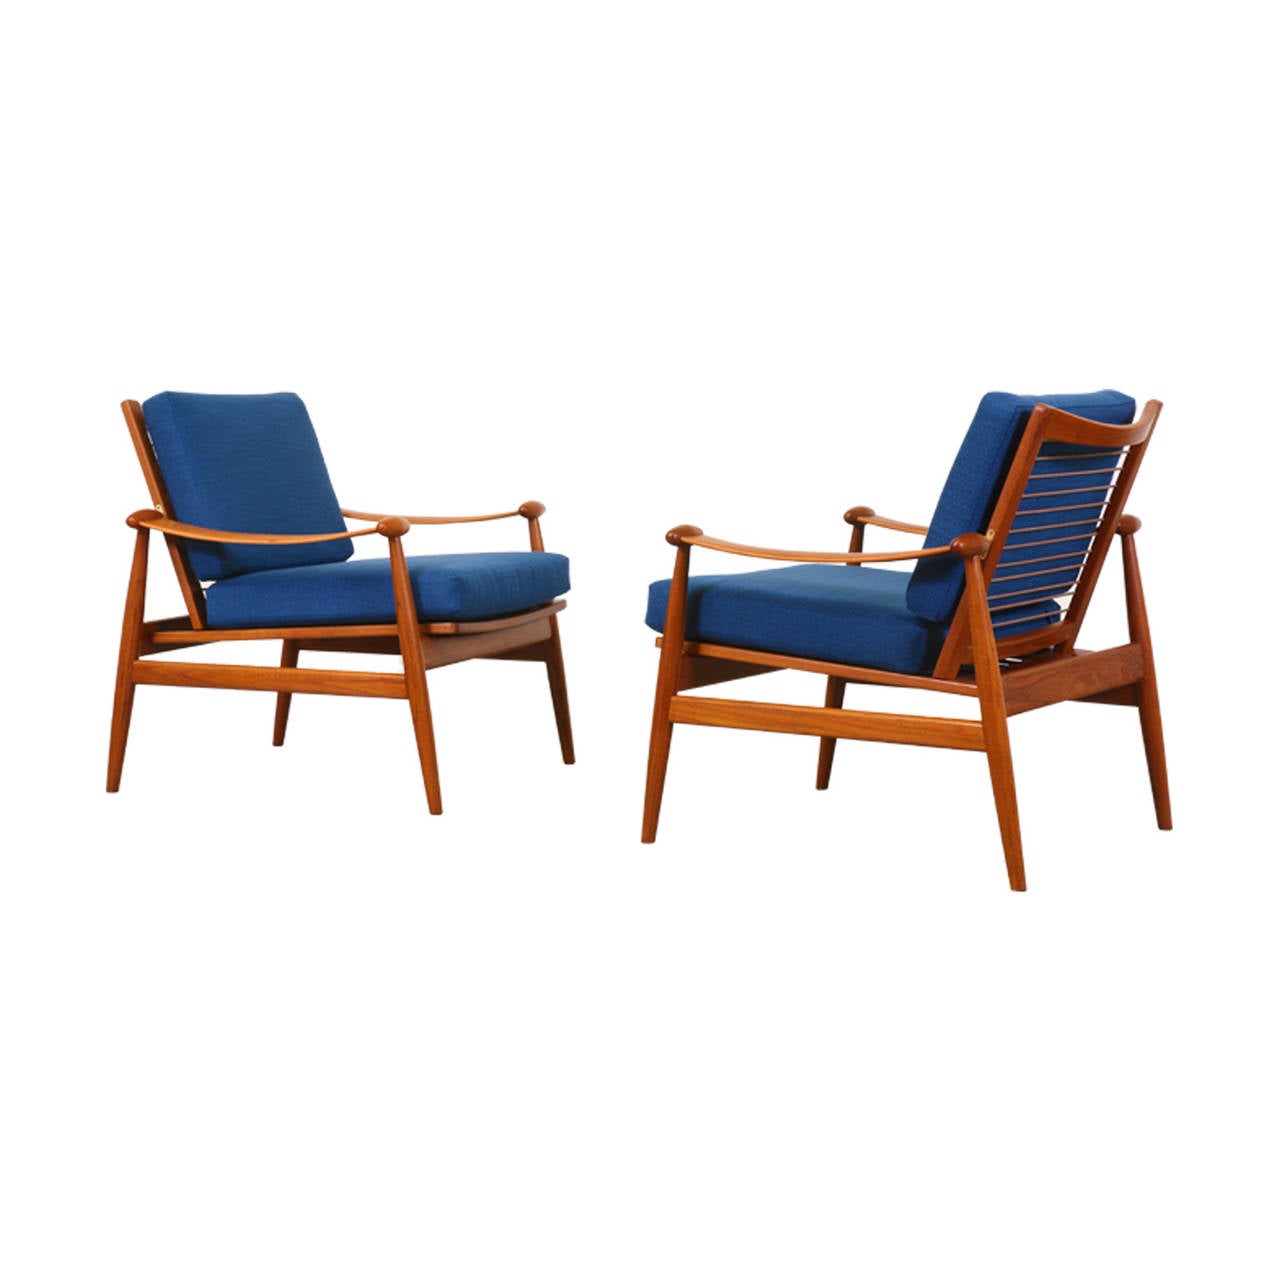 Mid-Century Modern Finn Juhl Model #133 “Spade” Teak Lounge Chairs for France & Son